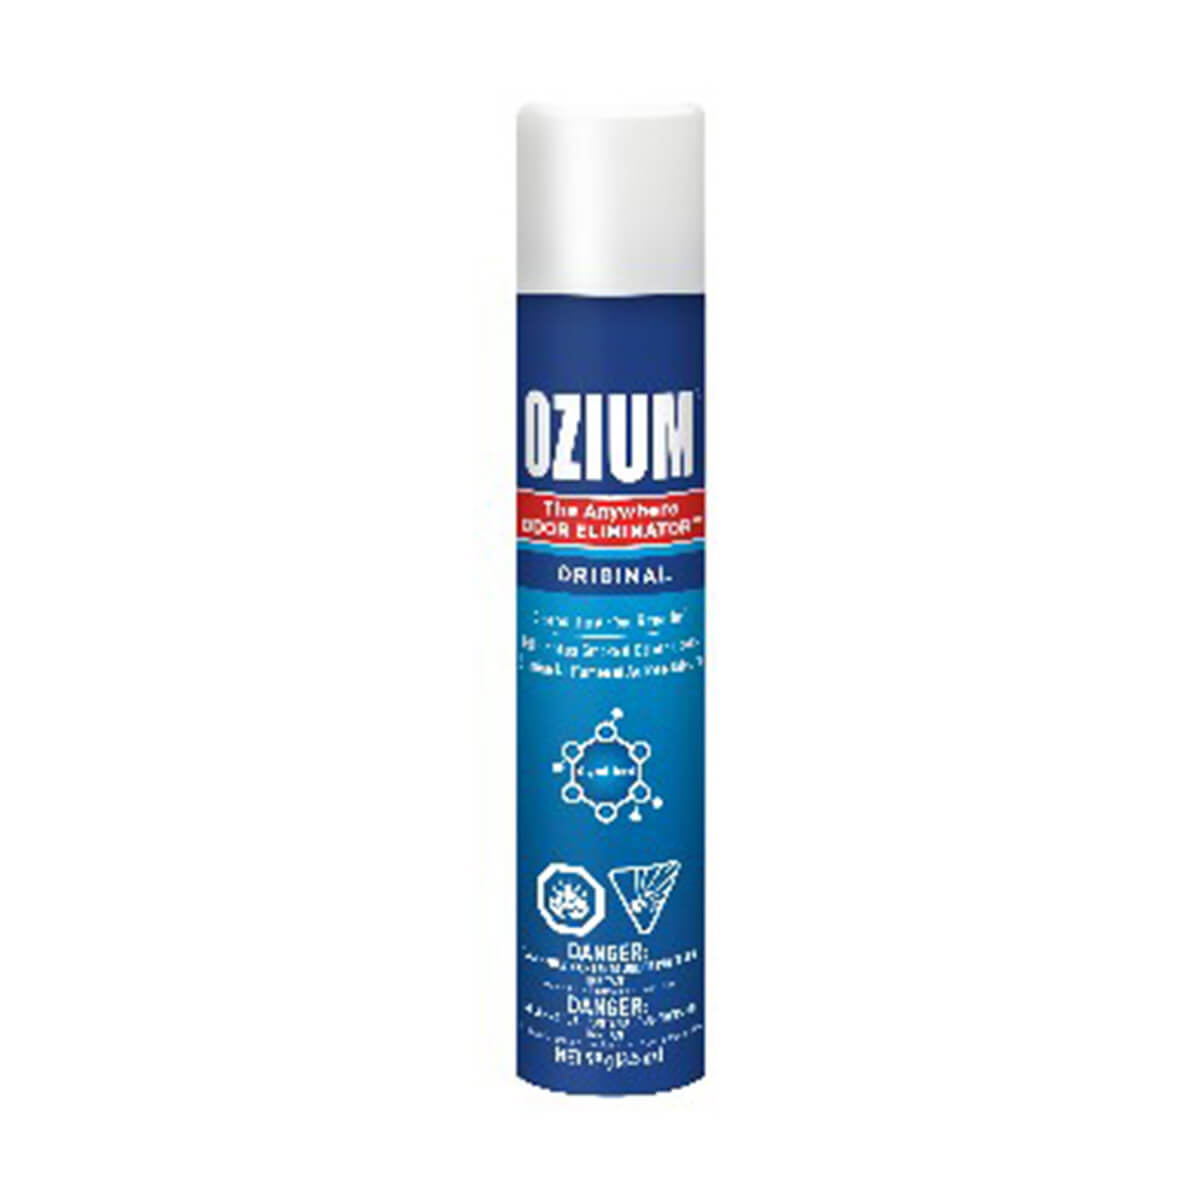 Ozium Original Scent Spray Air Freshener 3.5 oz